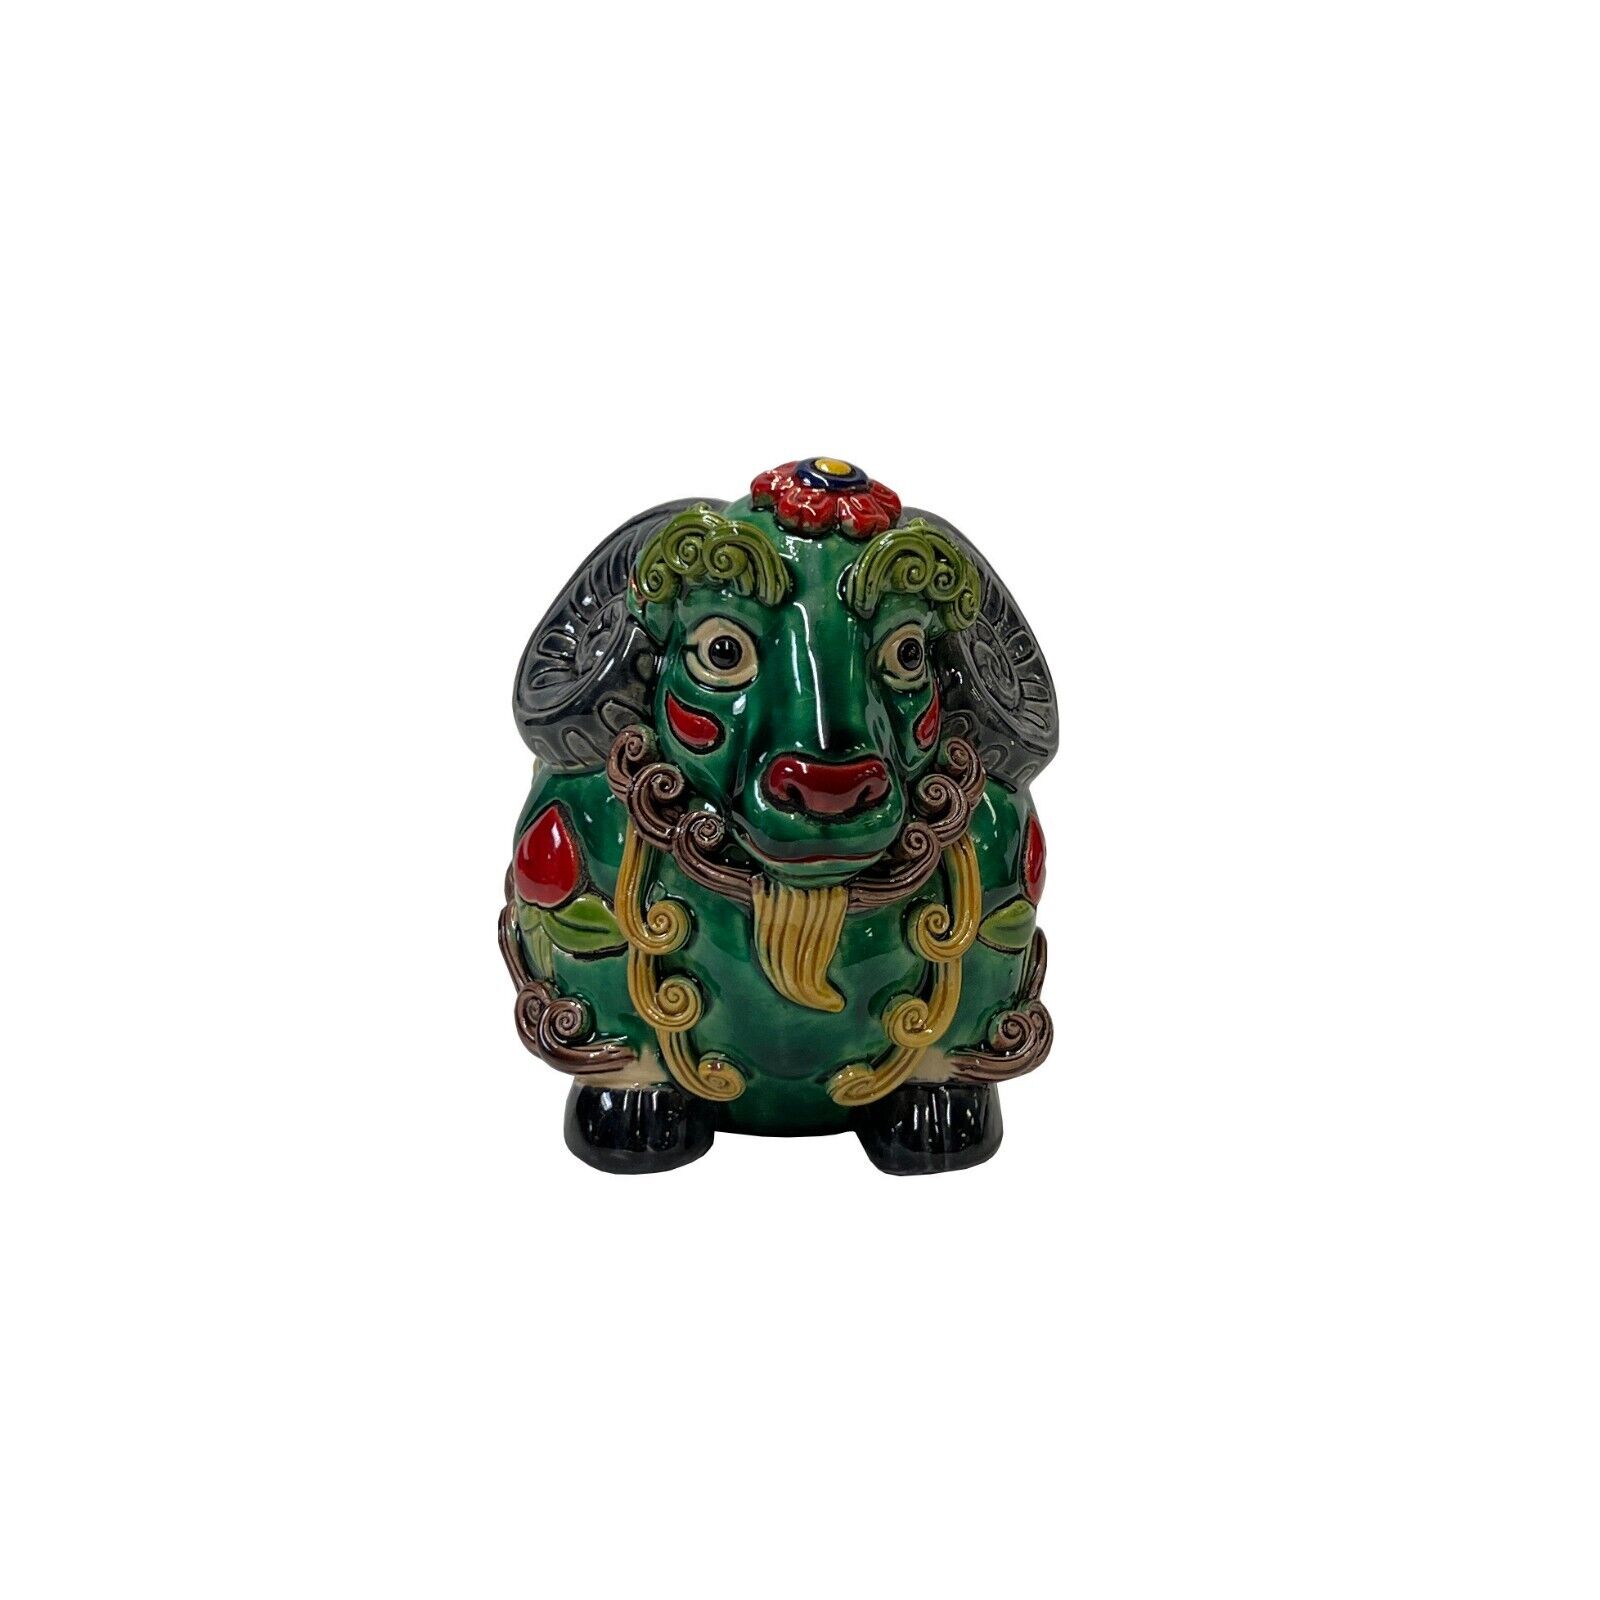 Handmade Green Small Ceramic Artistic Ram Figure Display Art ws3234